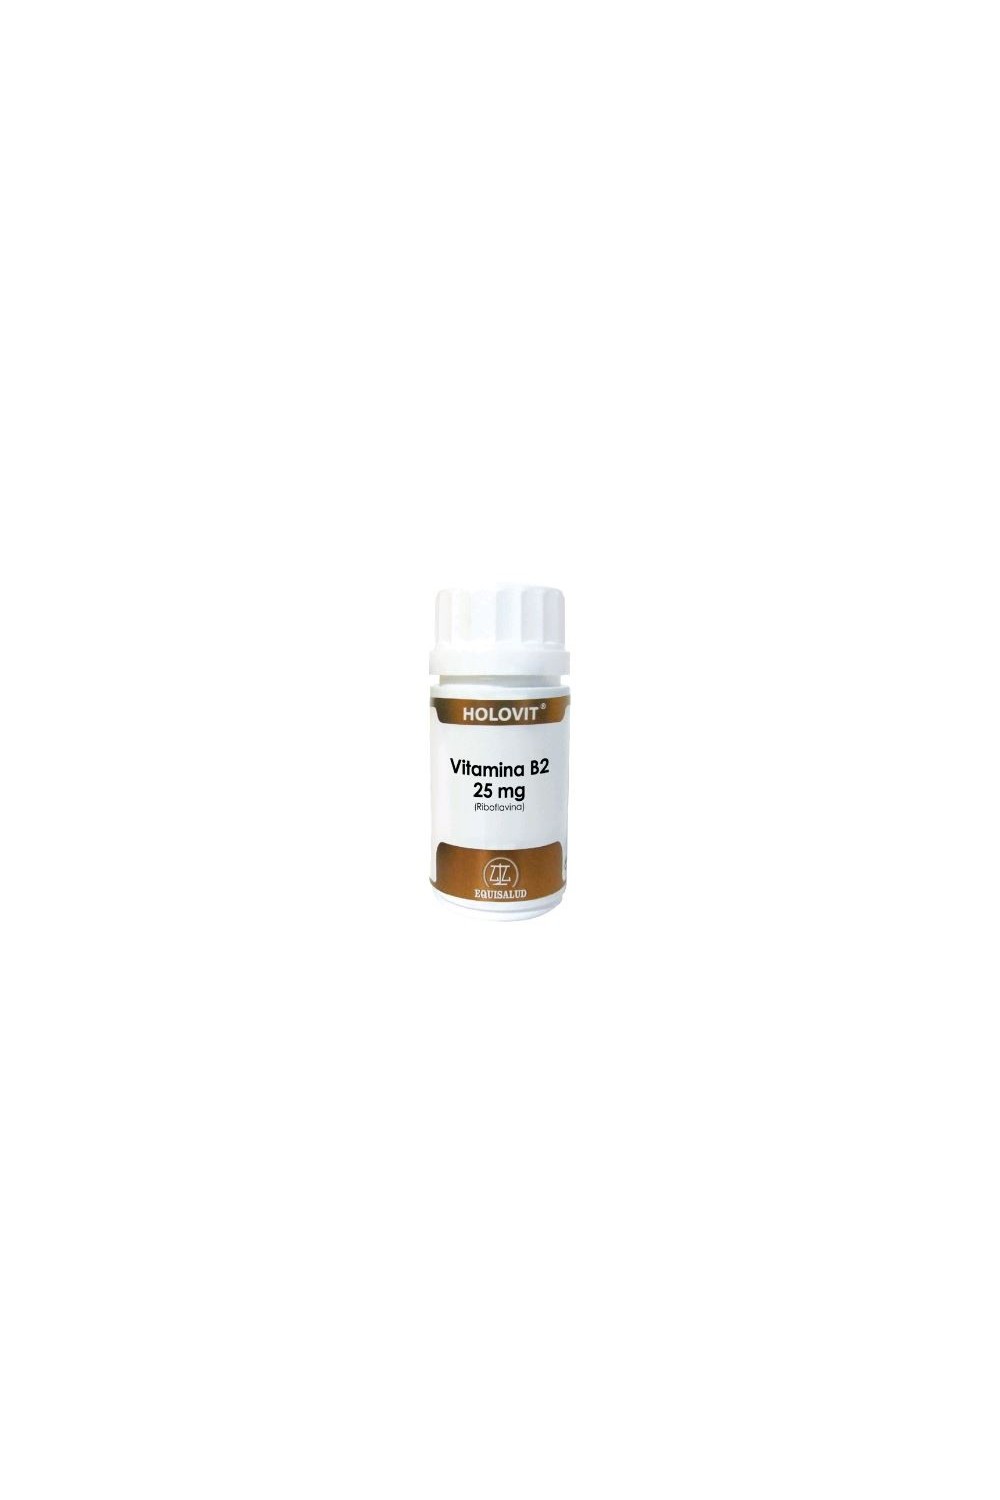 Equisalud Holovit Vitamina B2 25 Mg 50 Caps